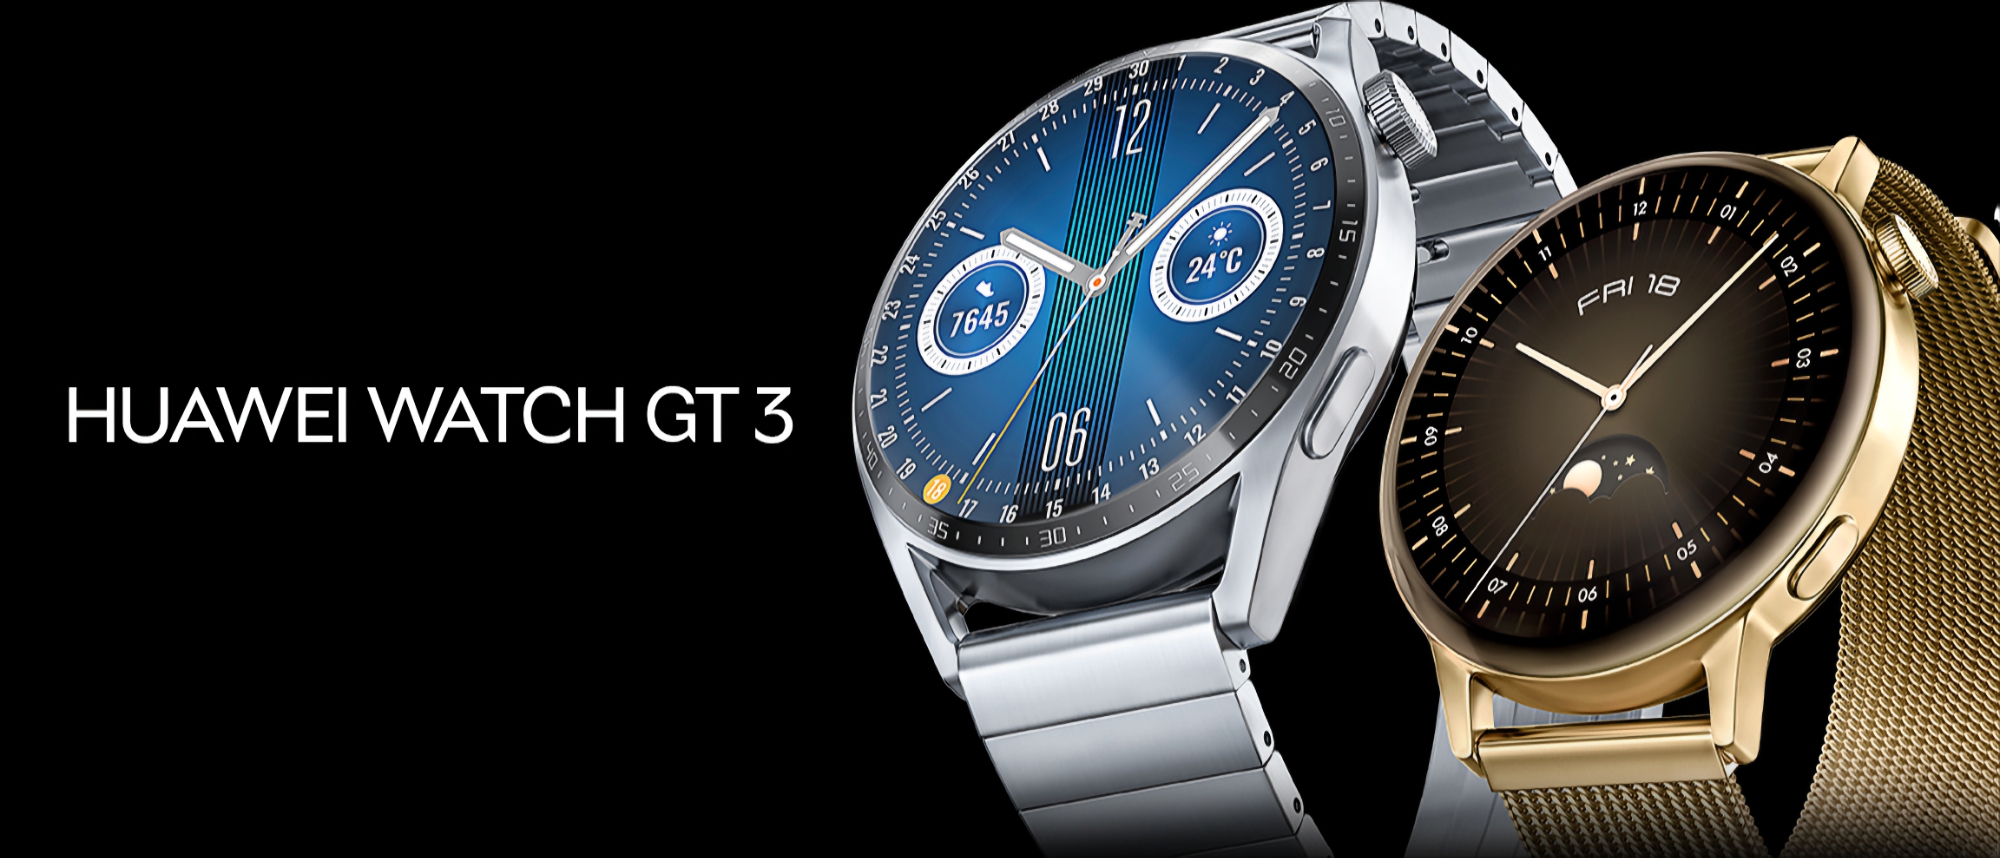 The Huawei Watch GT 3 smartwatch receives a new software update